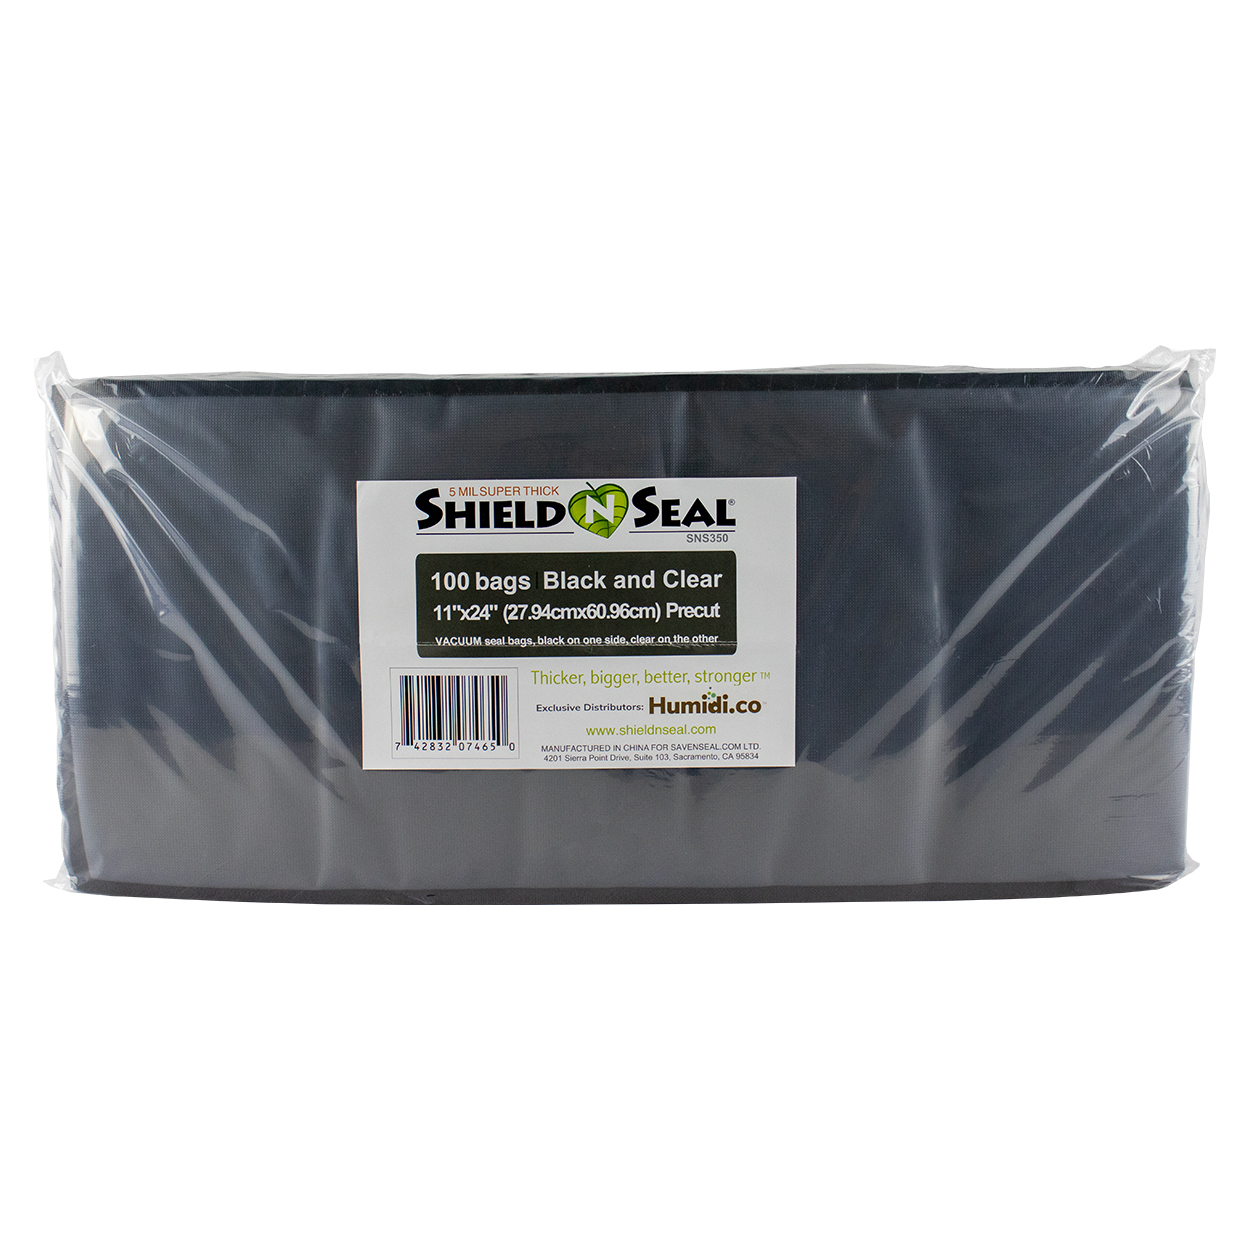 Shield N Seal All Black Vacuum Sealer Pre-Cut Bags - 11 x 24